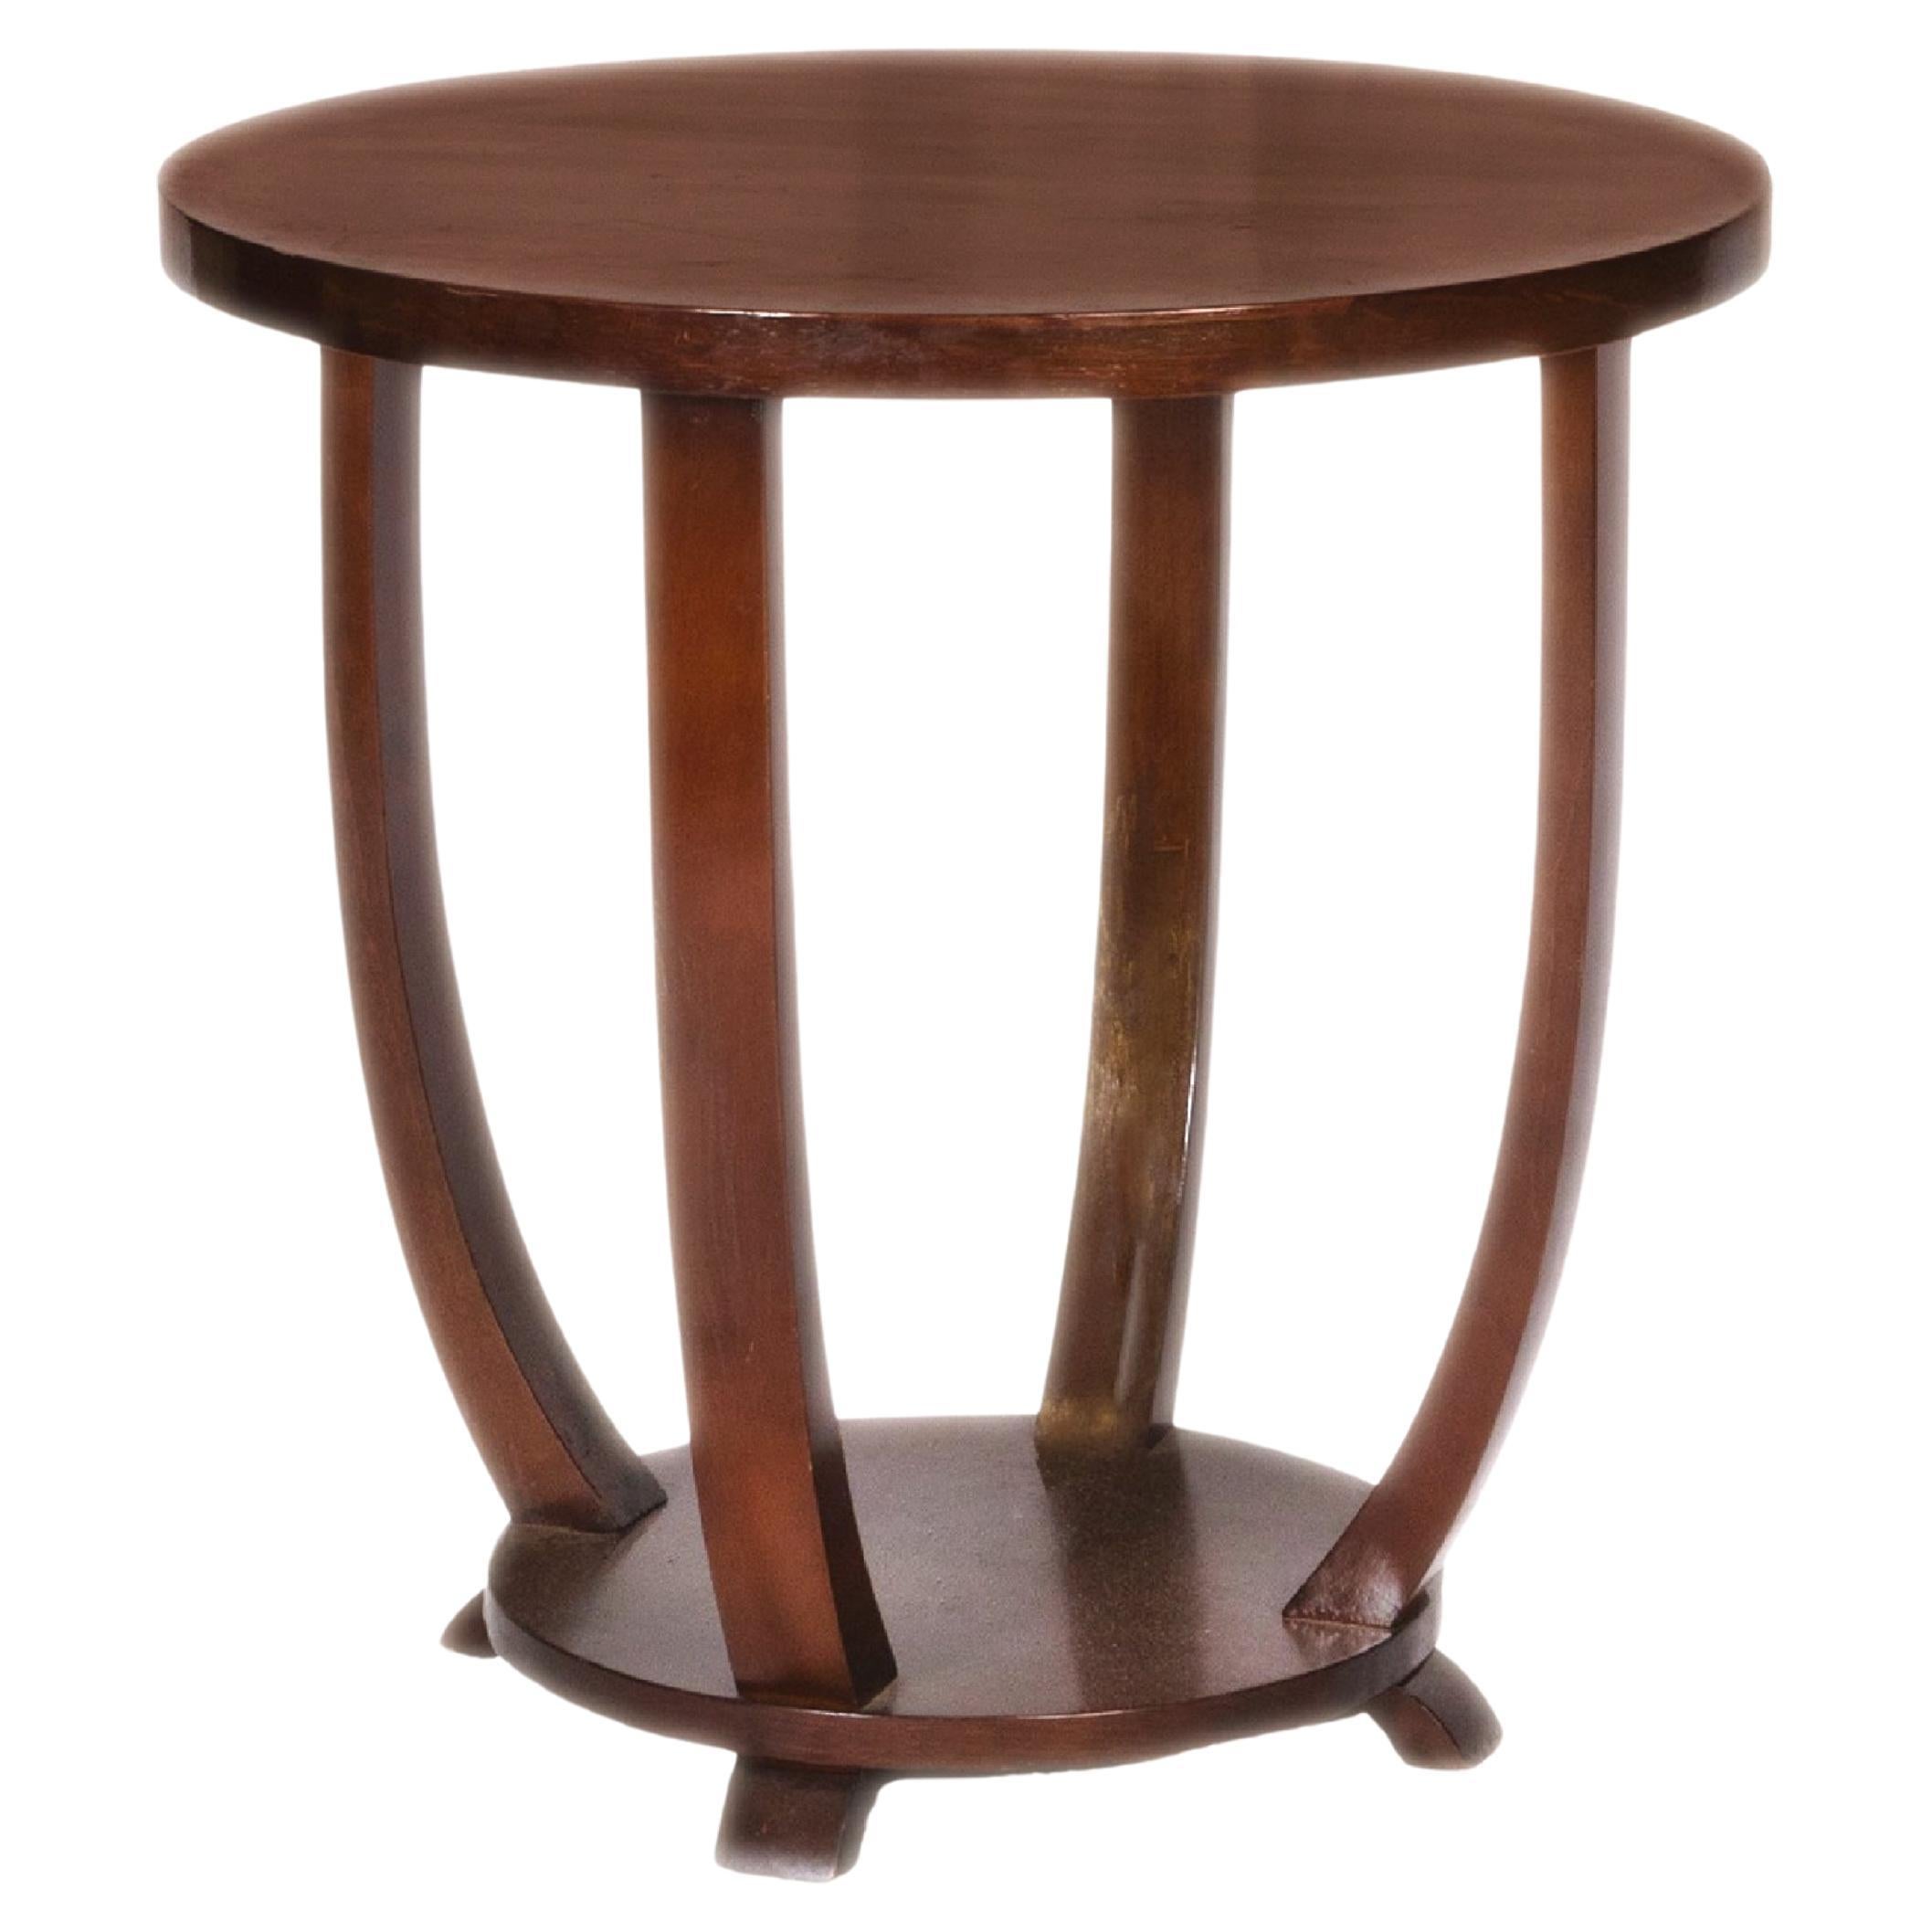  Art Deco Pedestal Table in Walnut, France, 1930s For Sale